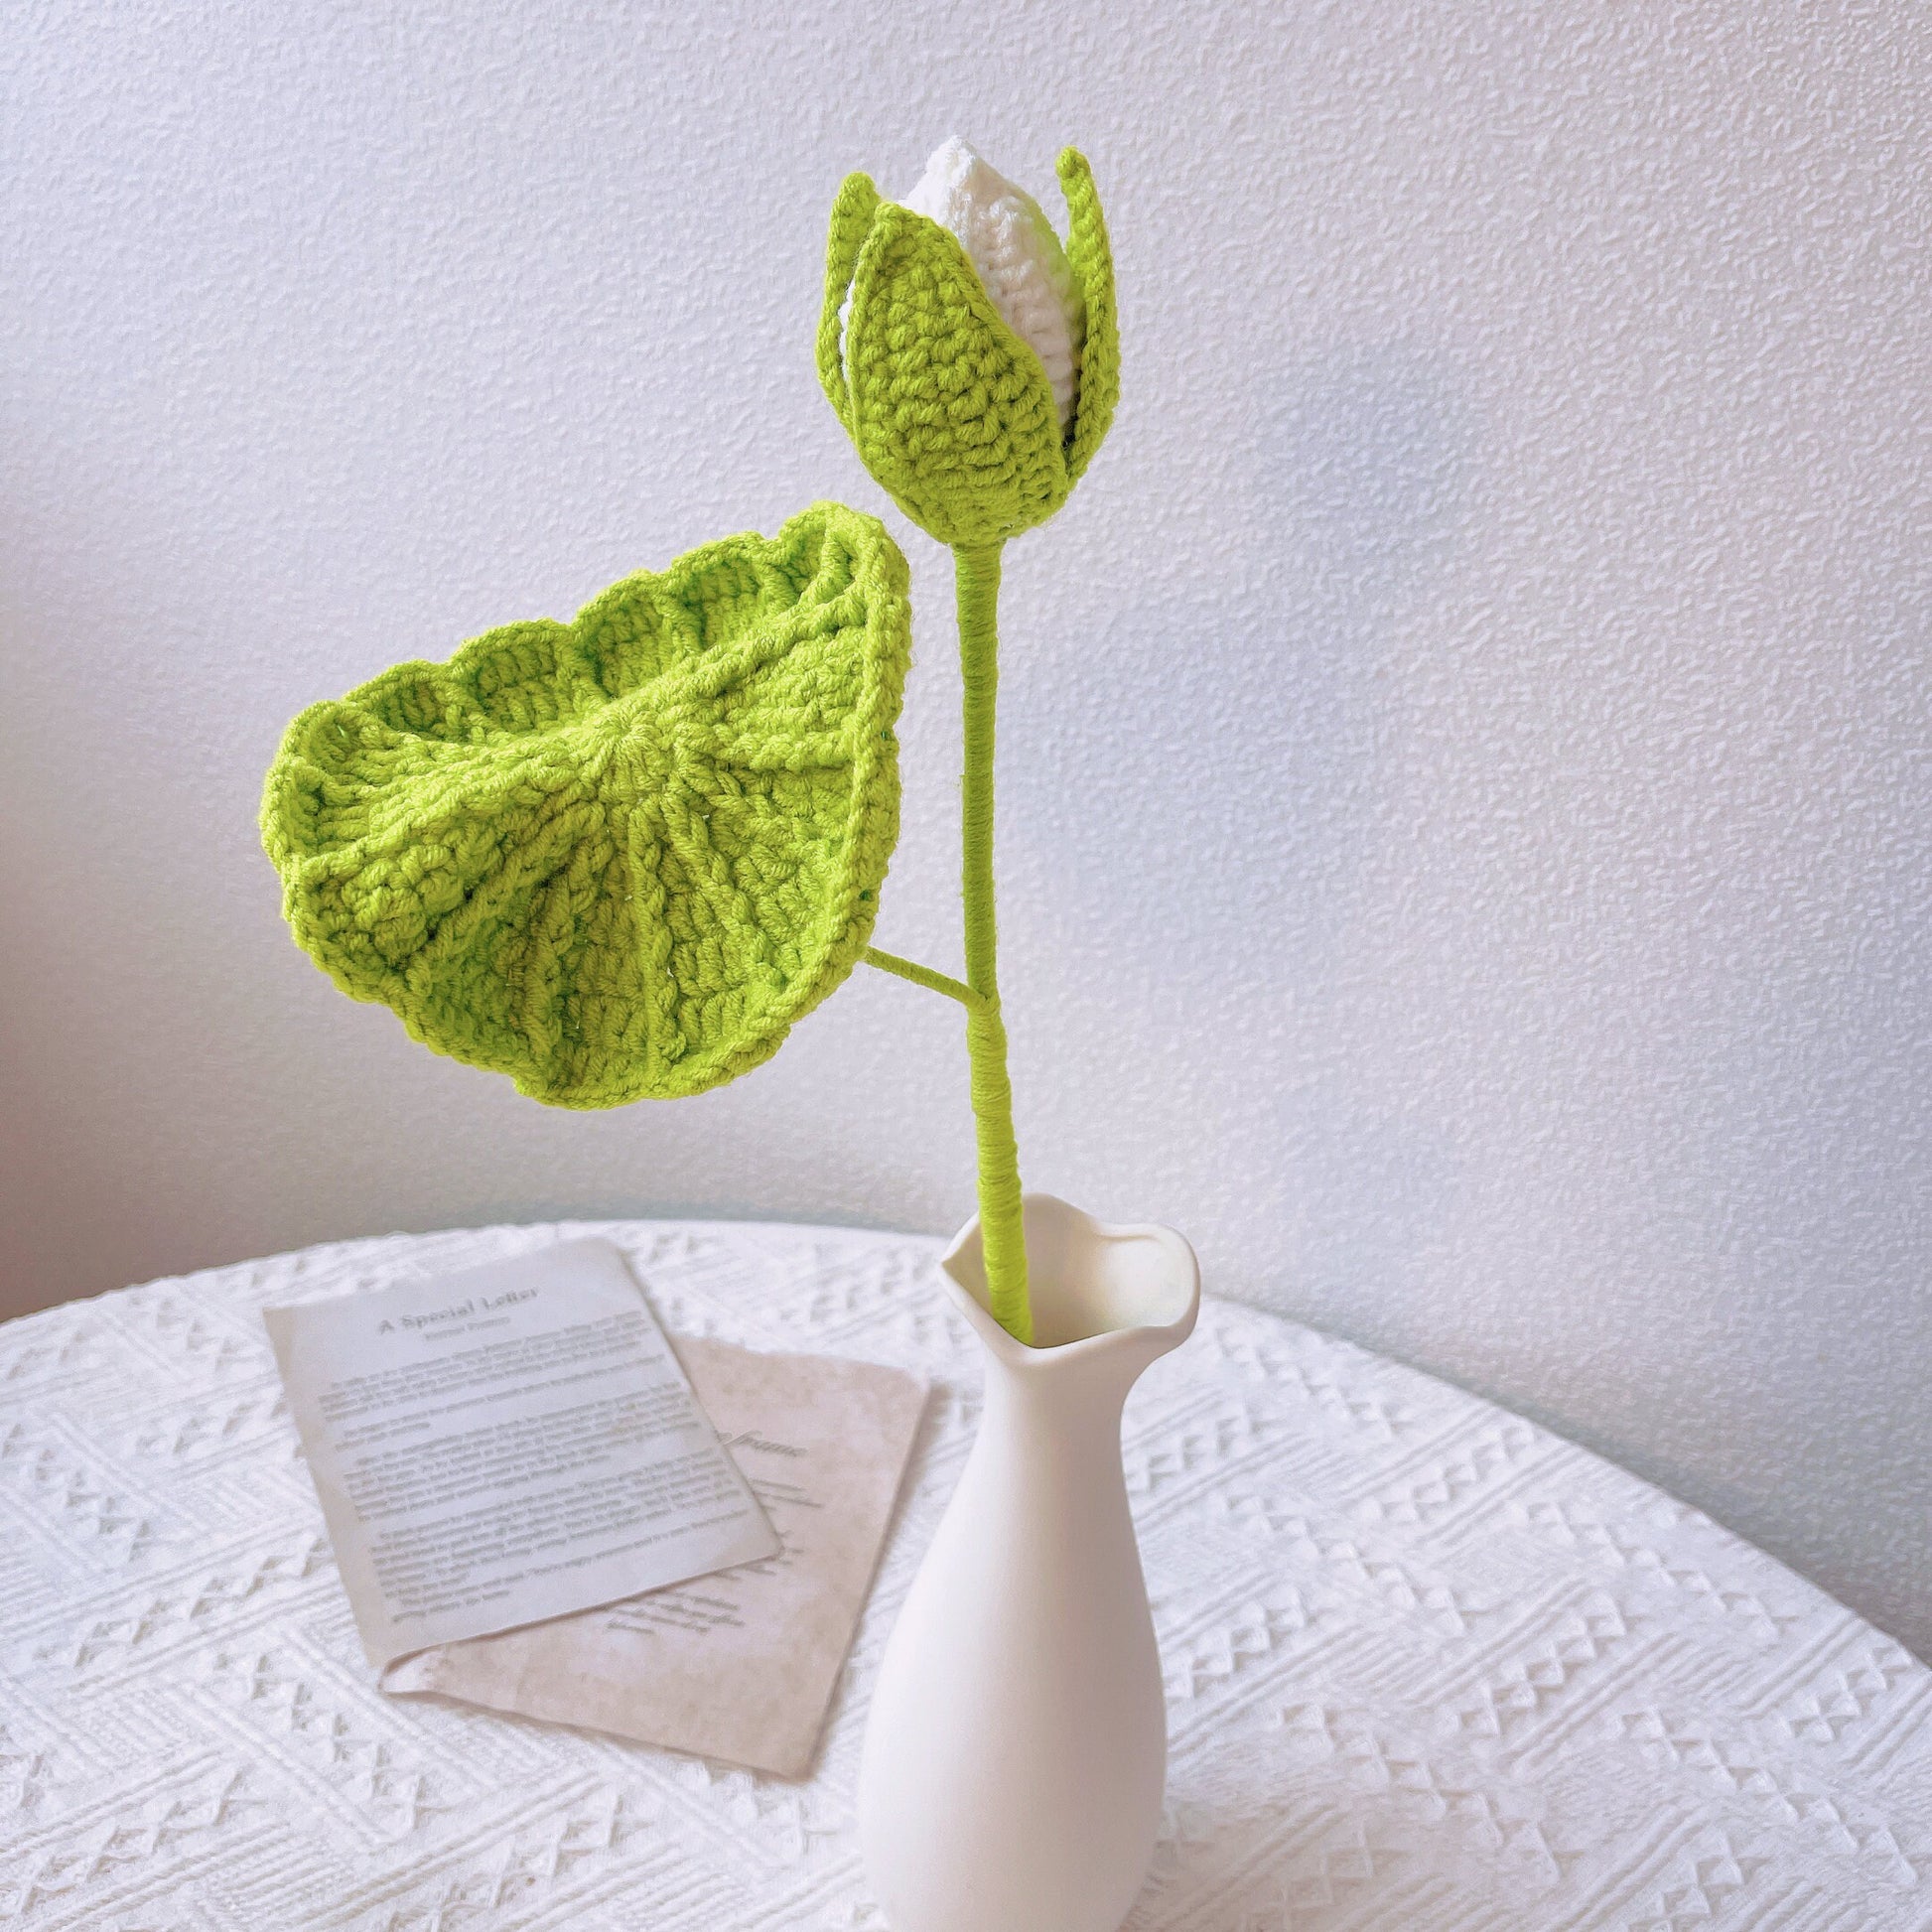 Crochet Lotus Blooms Collection - Craft and DIY Space, Cozy Home Decor, Flowers for Vase, Crochet Inspiration, Unique Centerpiece, Design